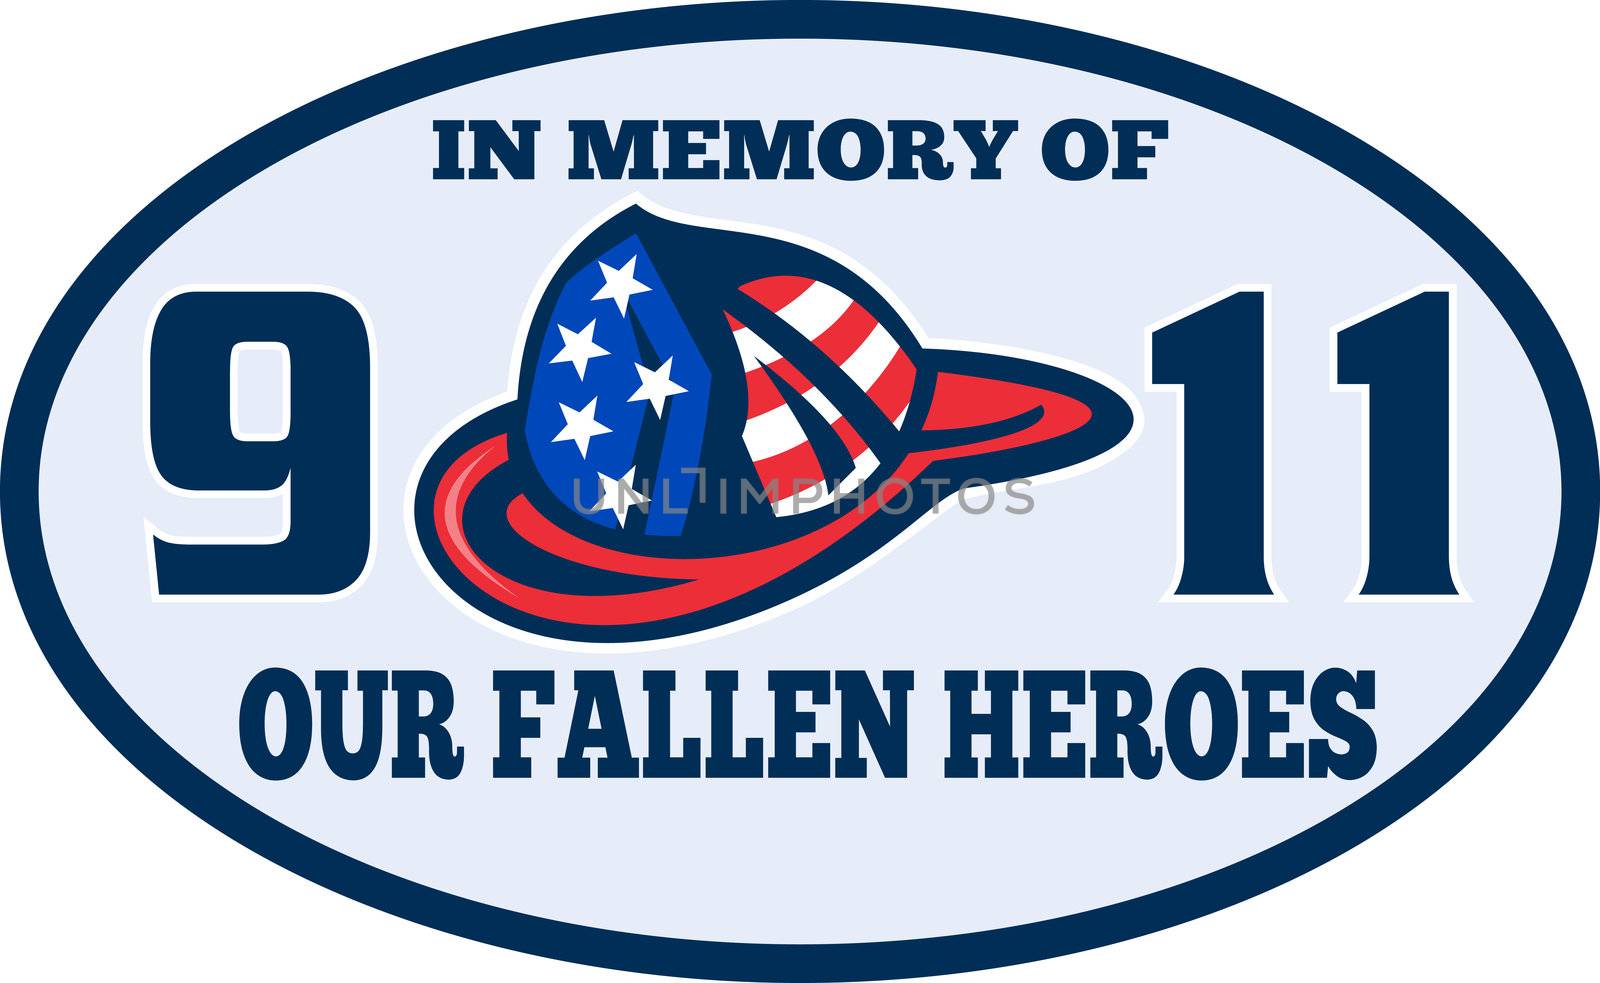 9-11 fireman firefighter hat american flag by patrimonio